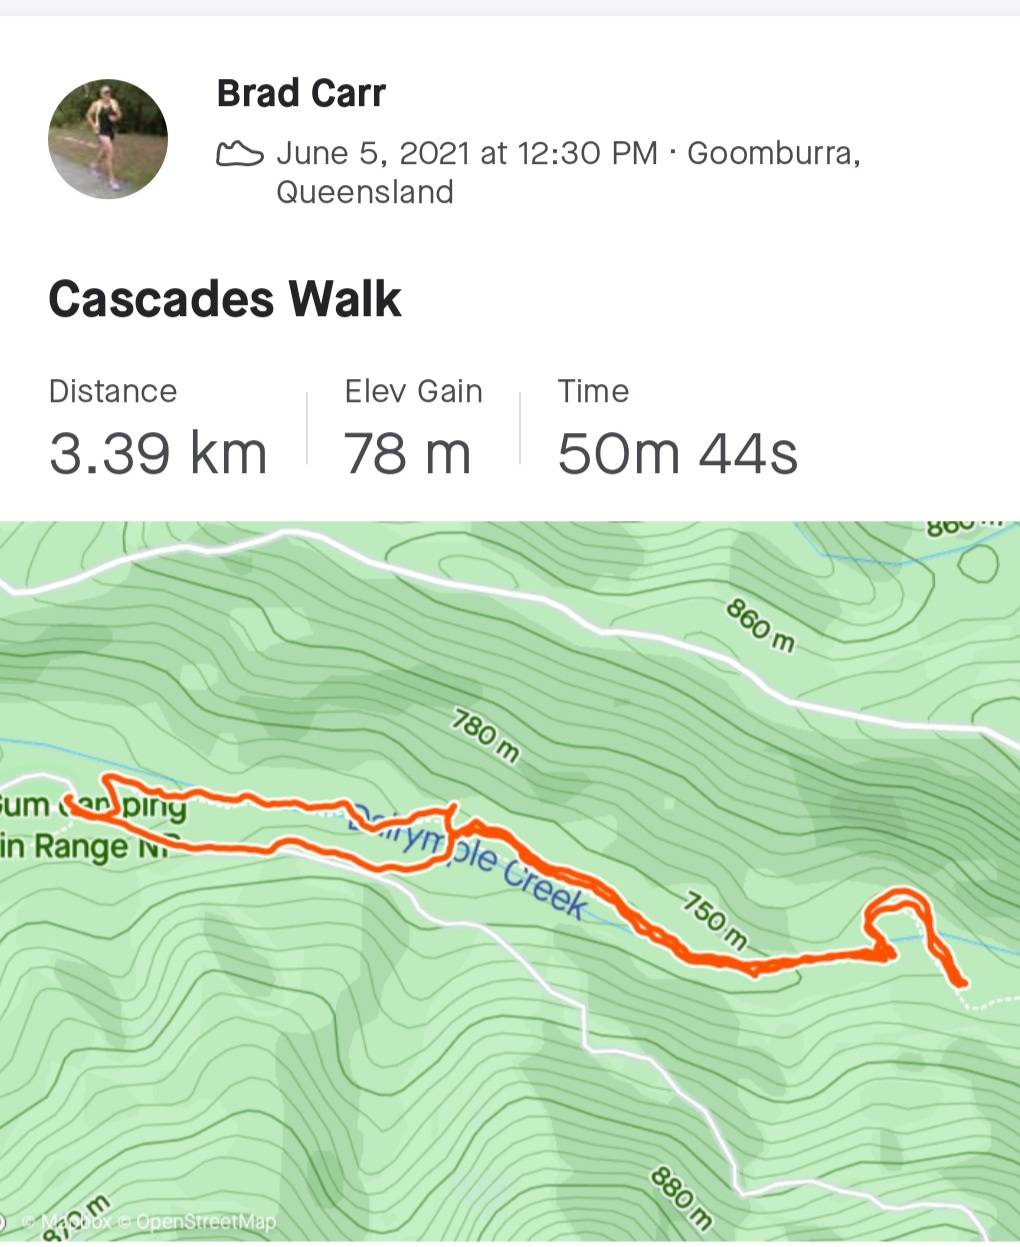 (Photo is a screenshot of my Strava app of the Cascades Walk)